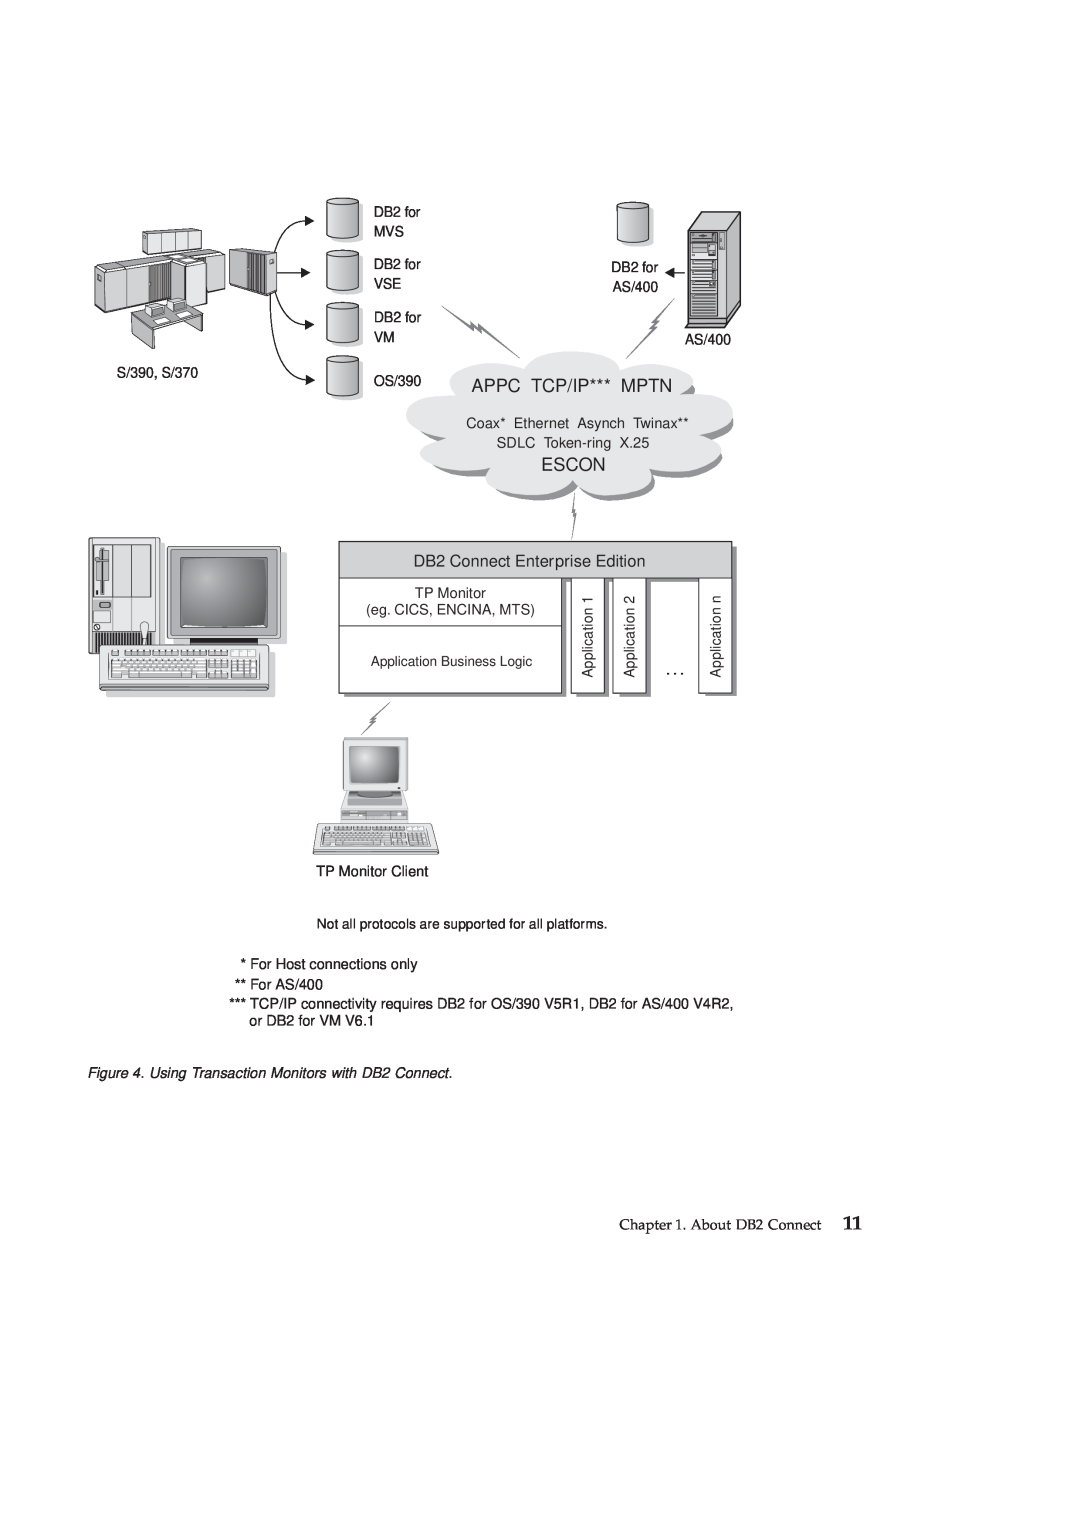 IBM GC09-2830-00 manual OS/390 APPC TCP/IP*** MPTN, Escon, DB2 Connect Enterprise Edition 